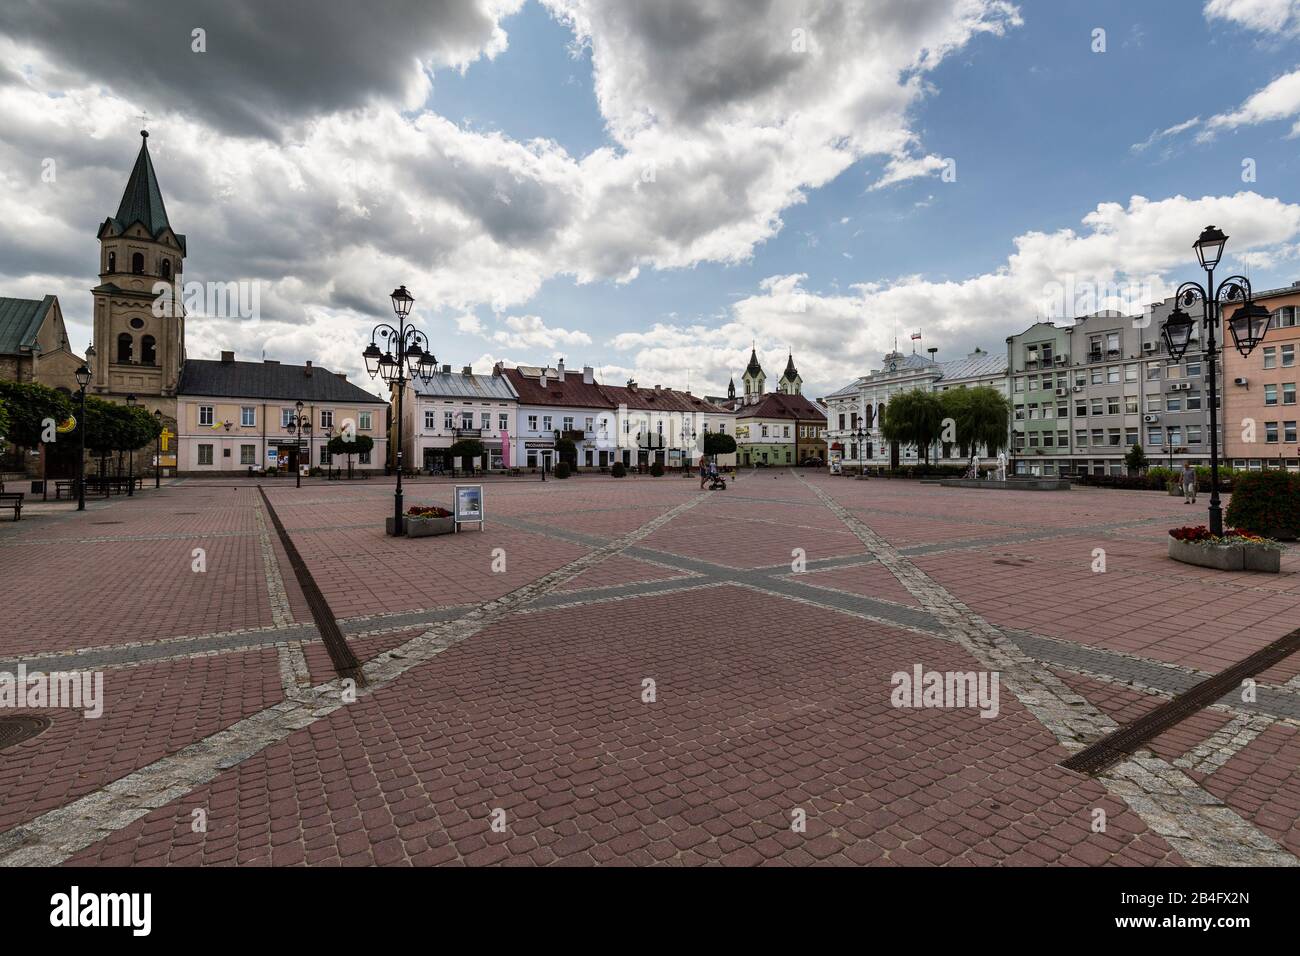 Europe, Poland, Podkarpackie Voivodeship, Sanok / Royal Free City of Sanok - Main Market Square in Sanok and Neogothic town hall Stock Photo